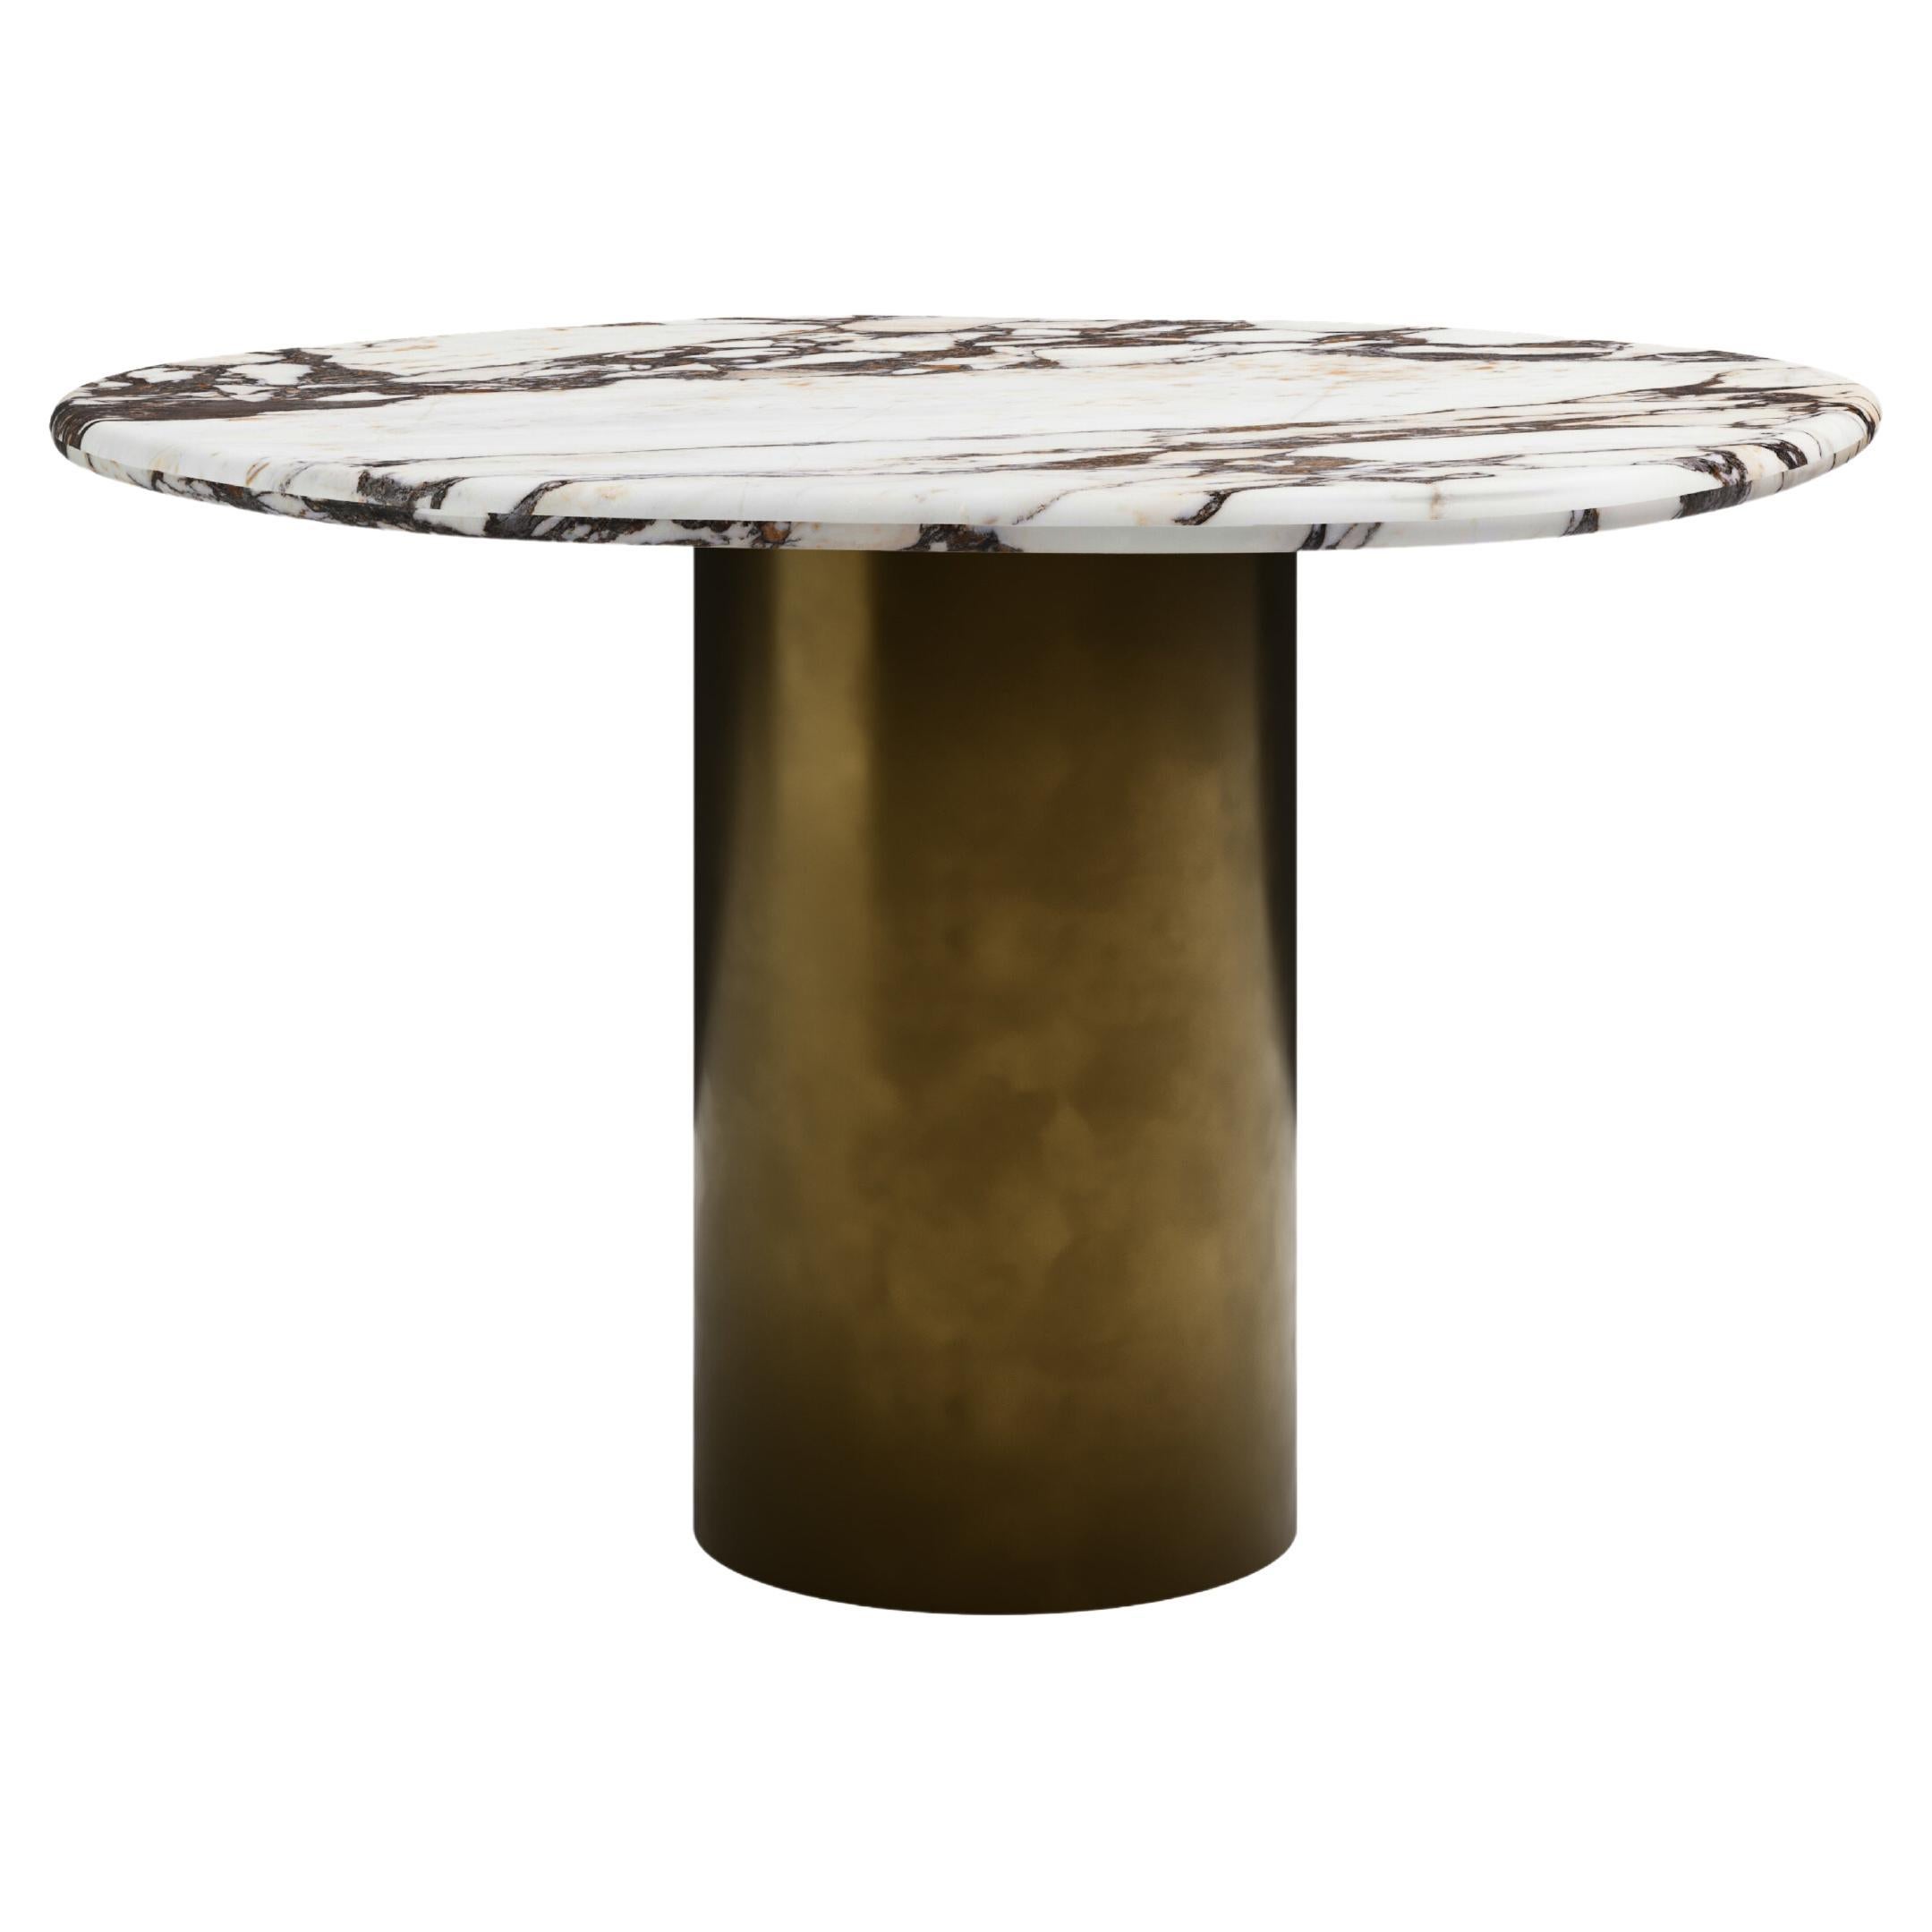 FORM(LA) Lago Round Dining Table 60”L x 60”W x 30”H Viola Marble & Bronze